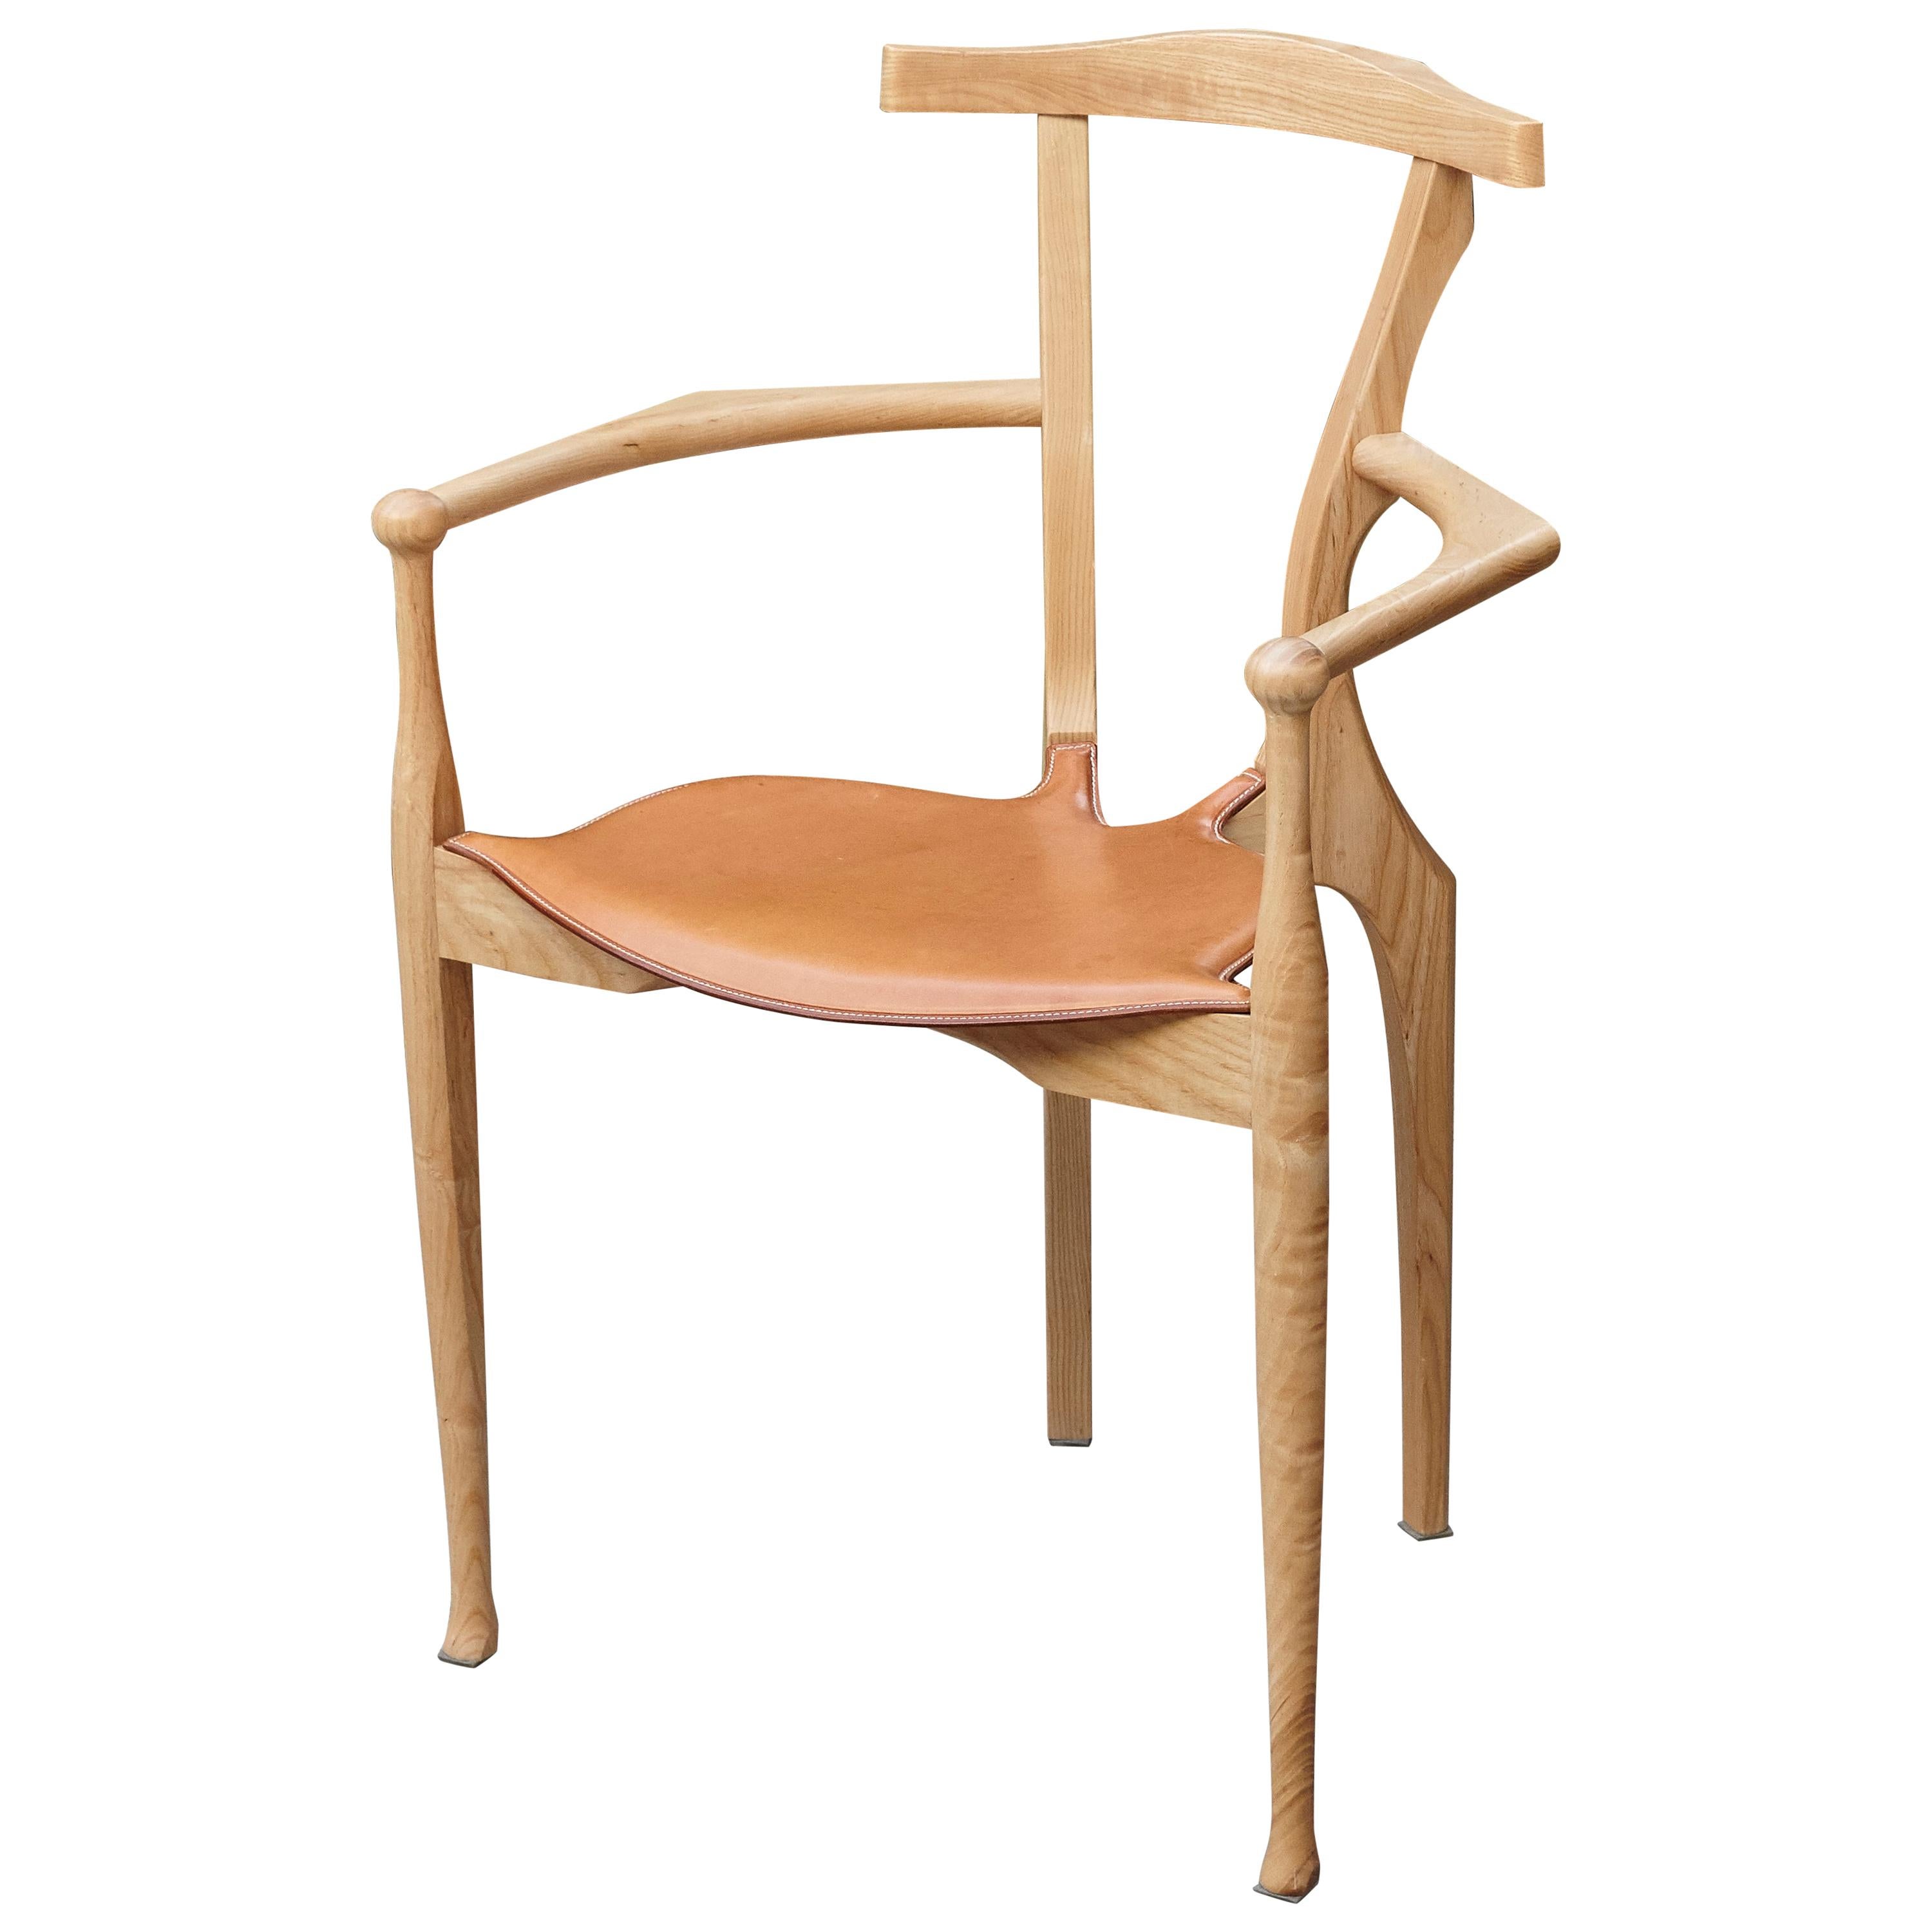 Oscar Tusquets Mid-Century Modern Leather Wood Gaulino Chair